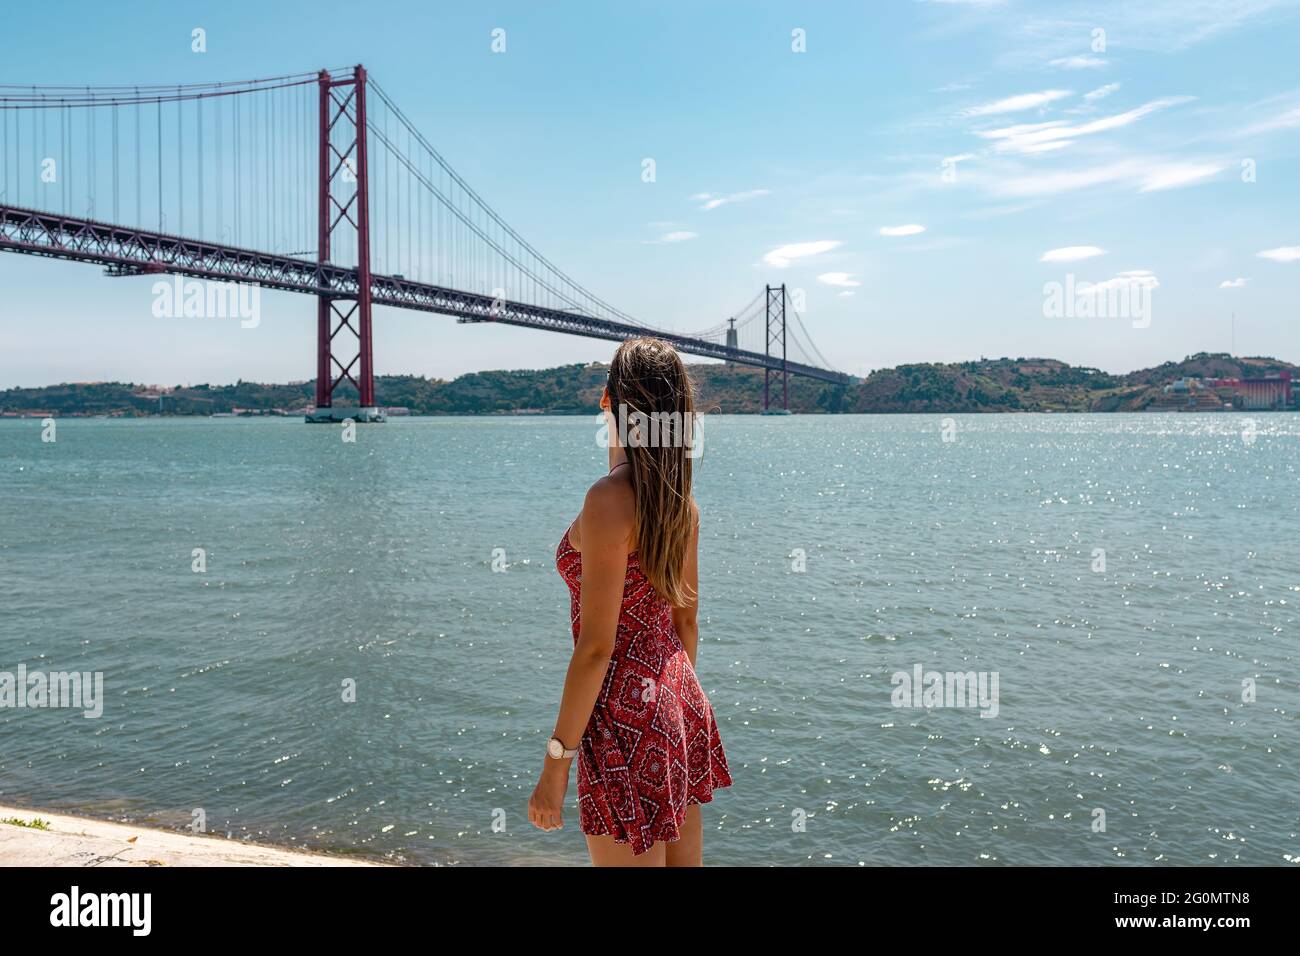 Ponte del 25 aprile e fiume Tago o Tejo dal Monumento scoperte. Felice donna turistica a braccia aperte alla piattaforma Padrao dos Descobrimentos. Belem Foto Stock